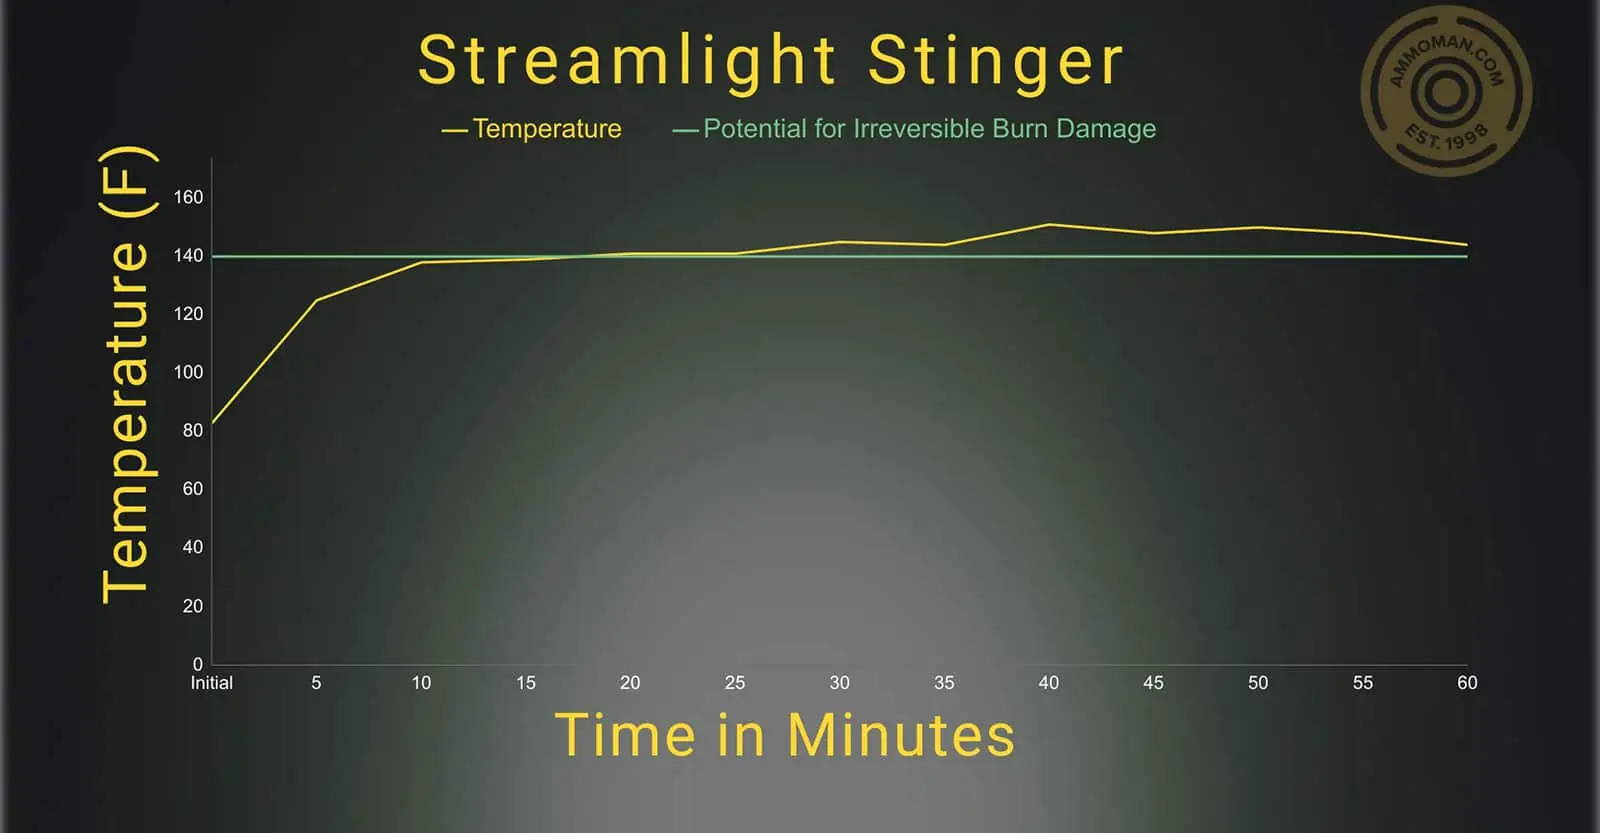 Streamlight Stinger temperature profile